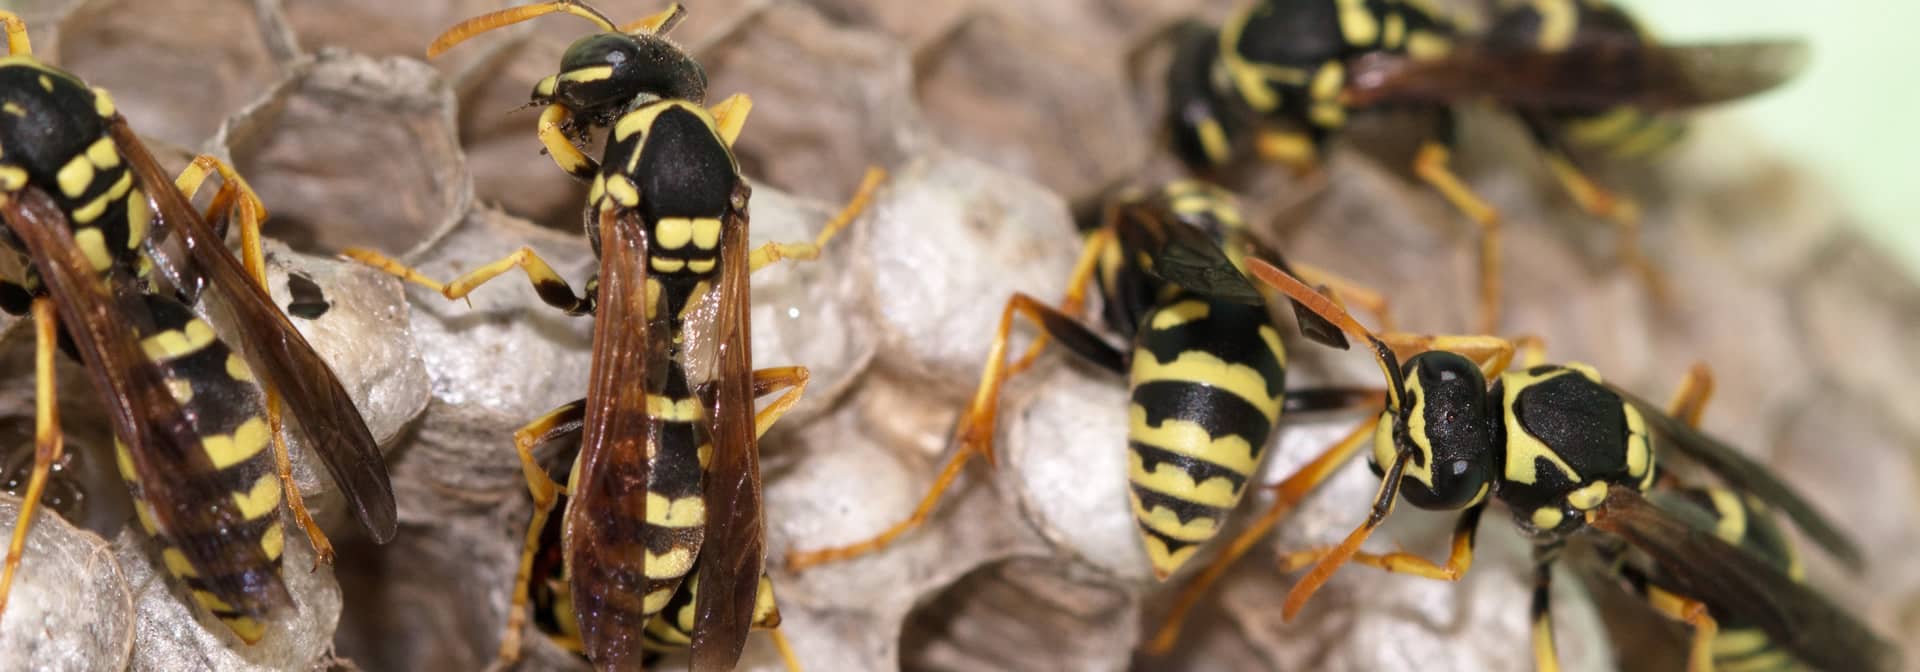 Michigan Wasp Extermination